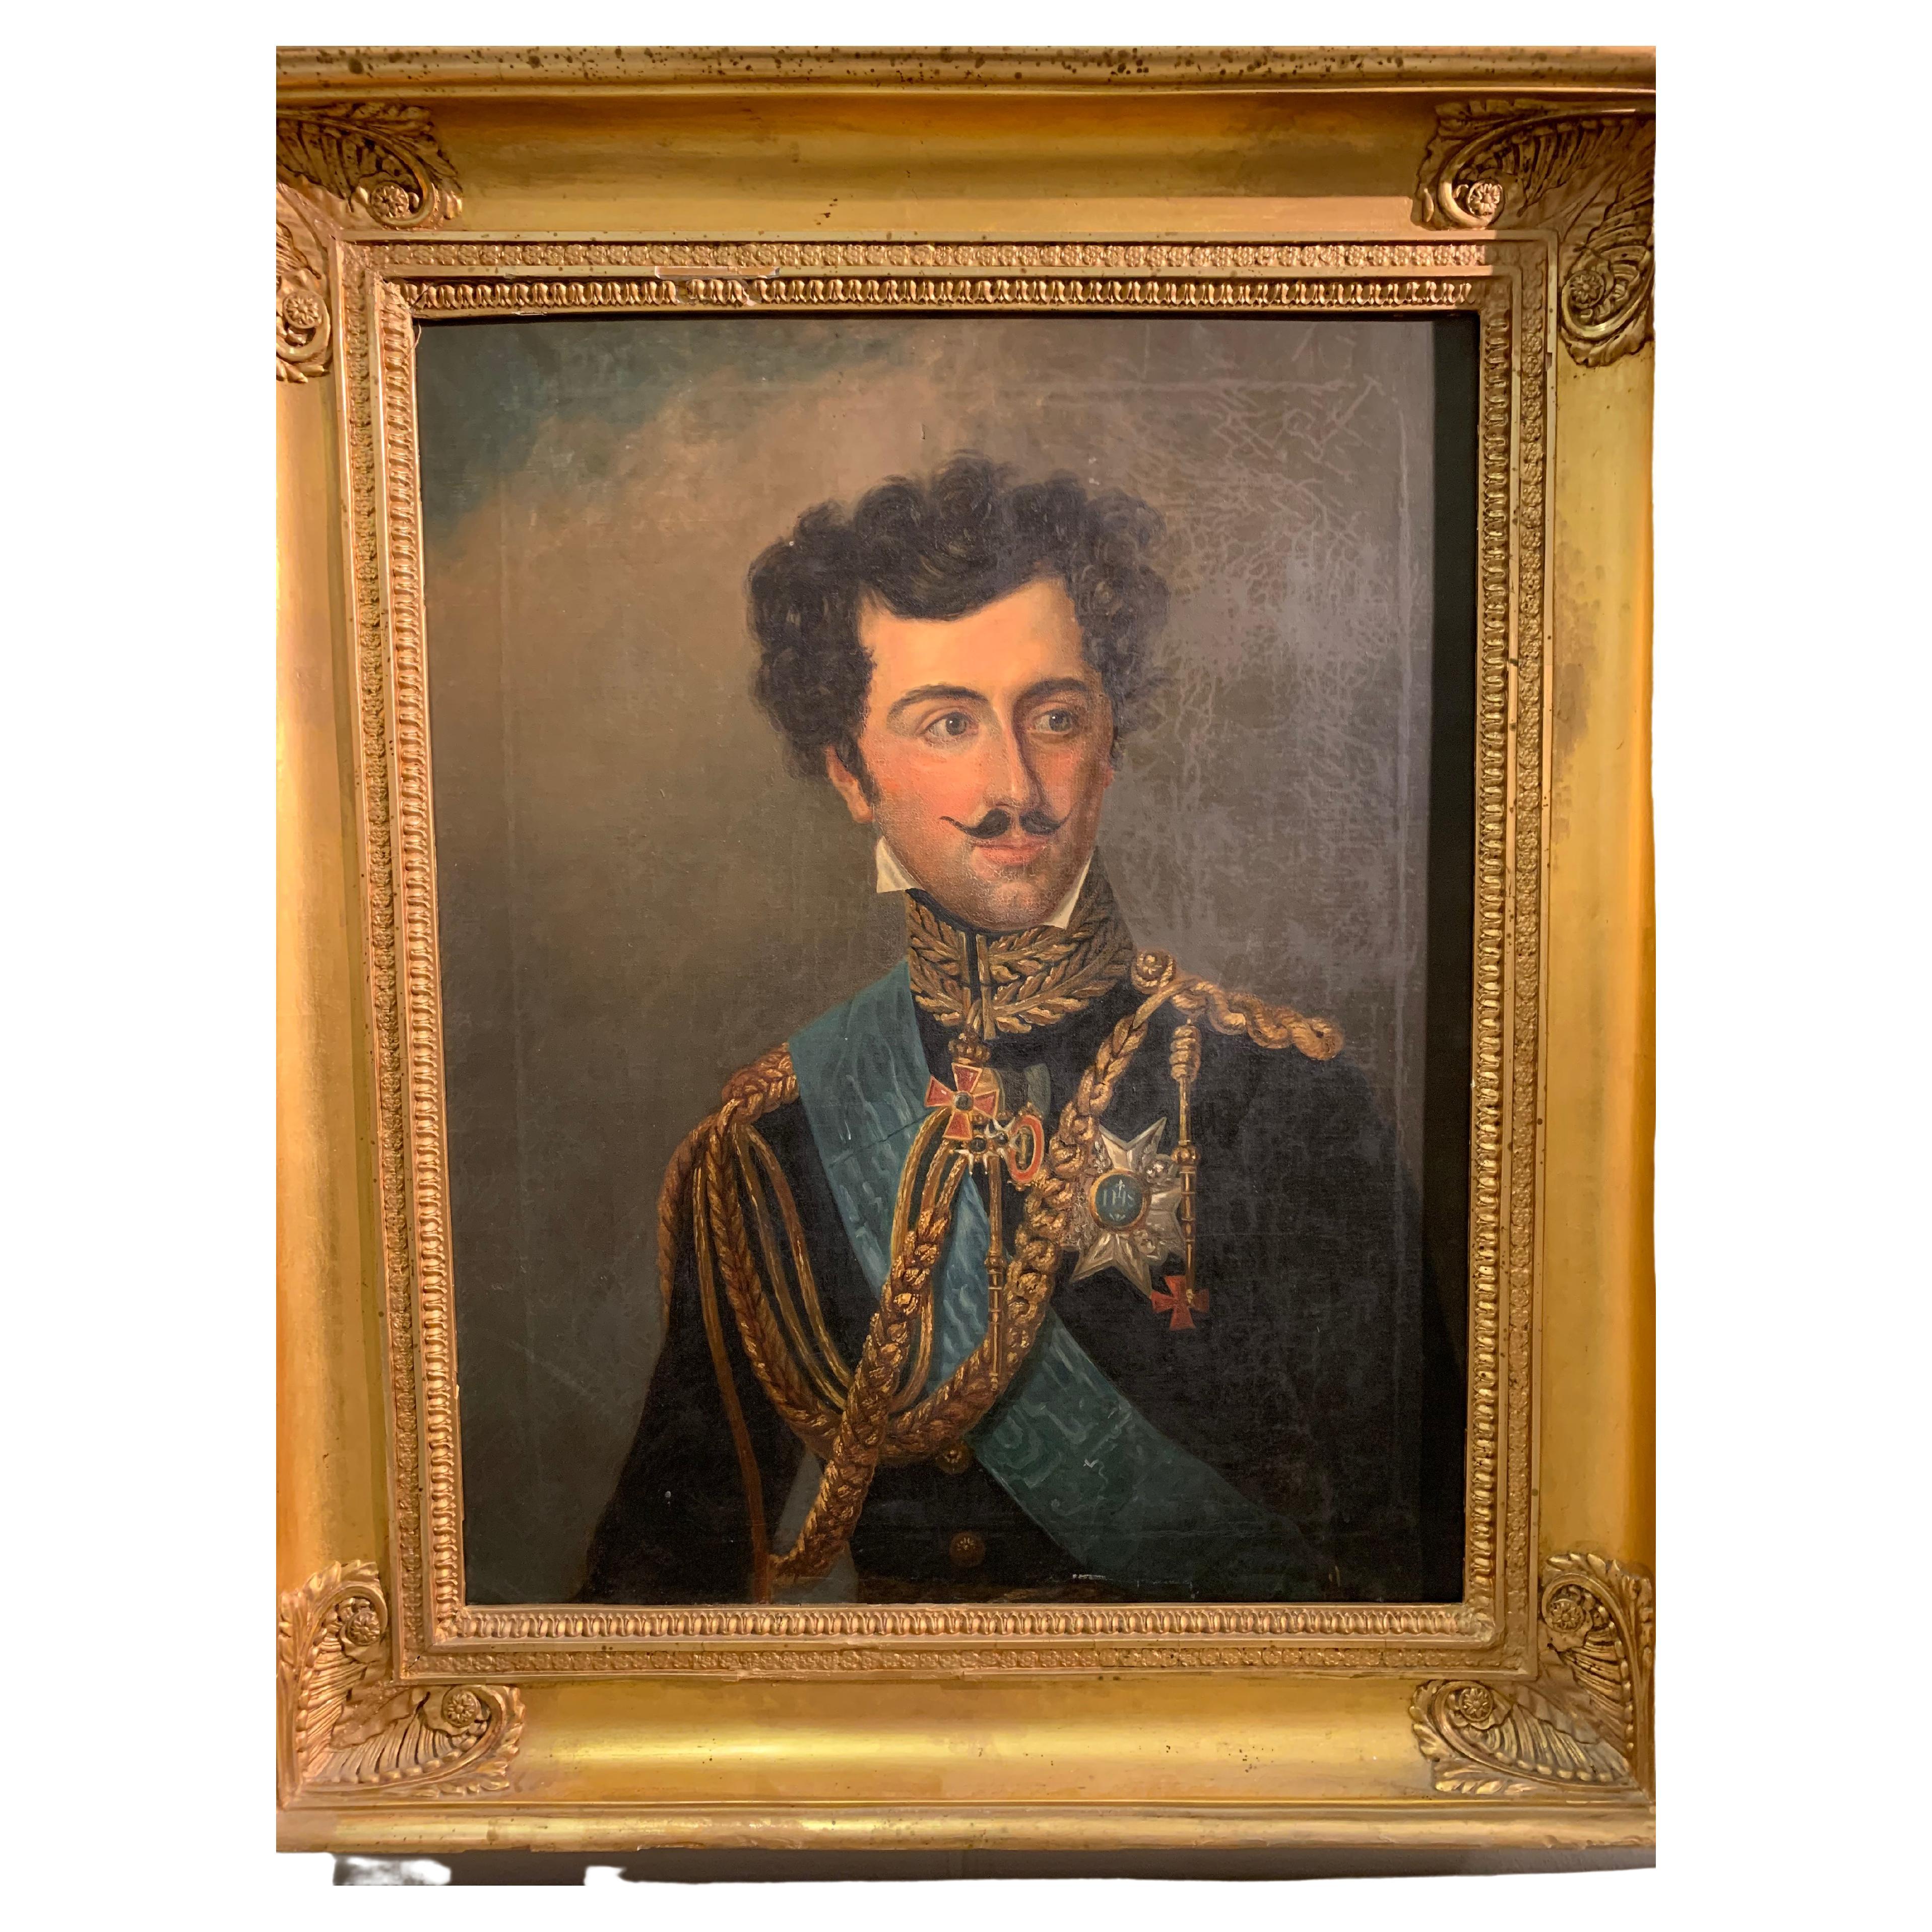 19th Century German Oil Painting, High Ranking Officer/Gentleman in Gilt Frame